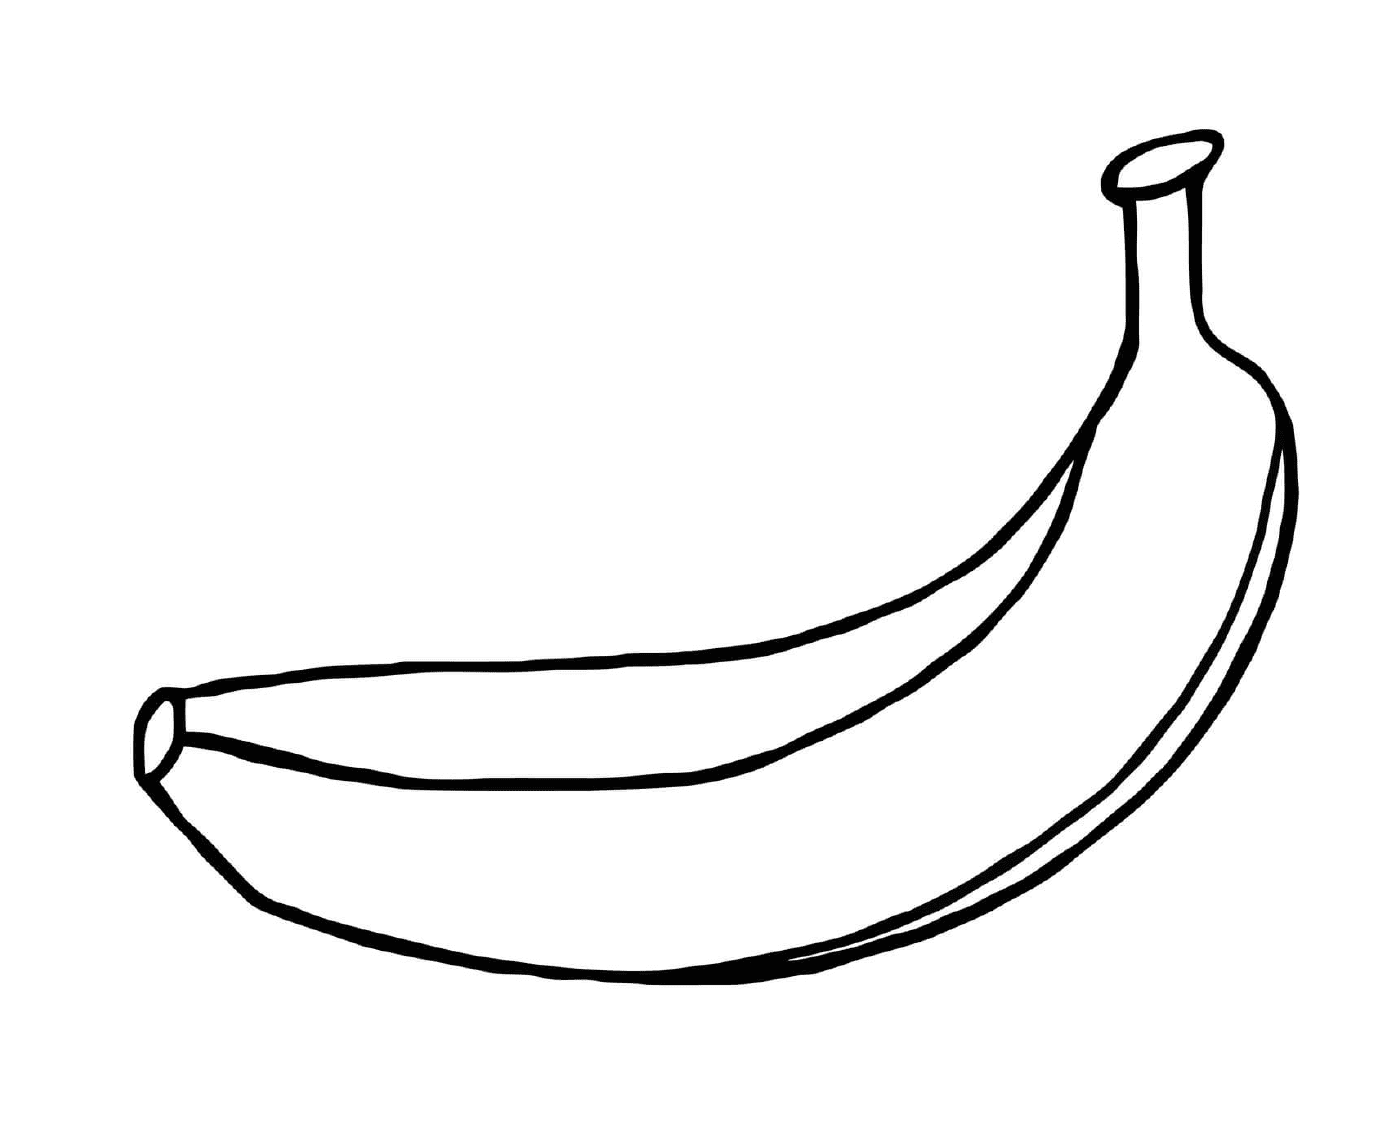   Une banane 